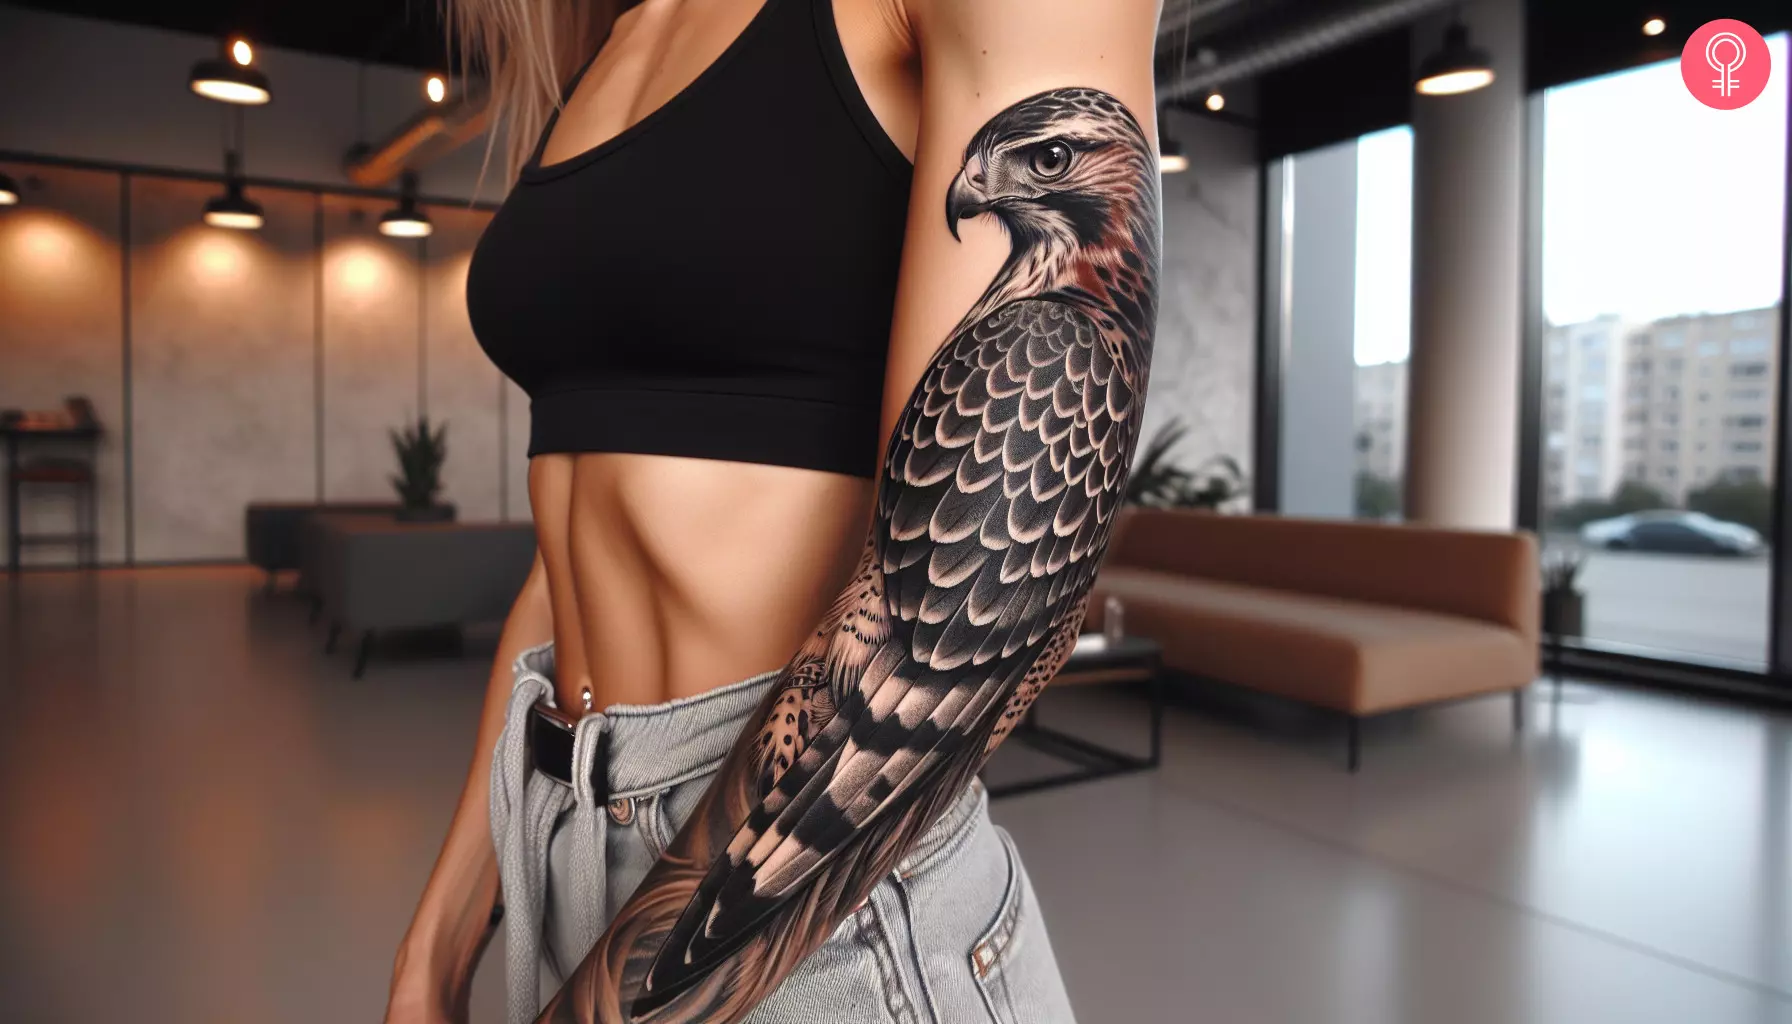 Hawk bird tattoo design on the arm of a woman